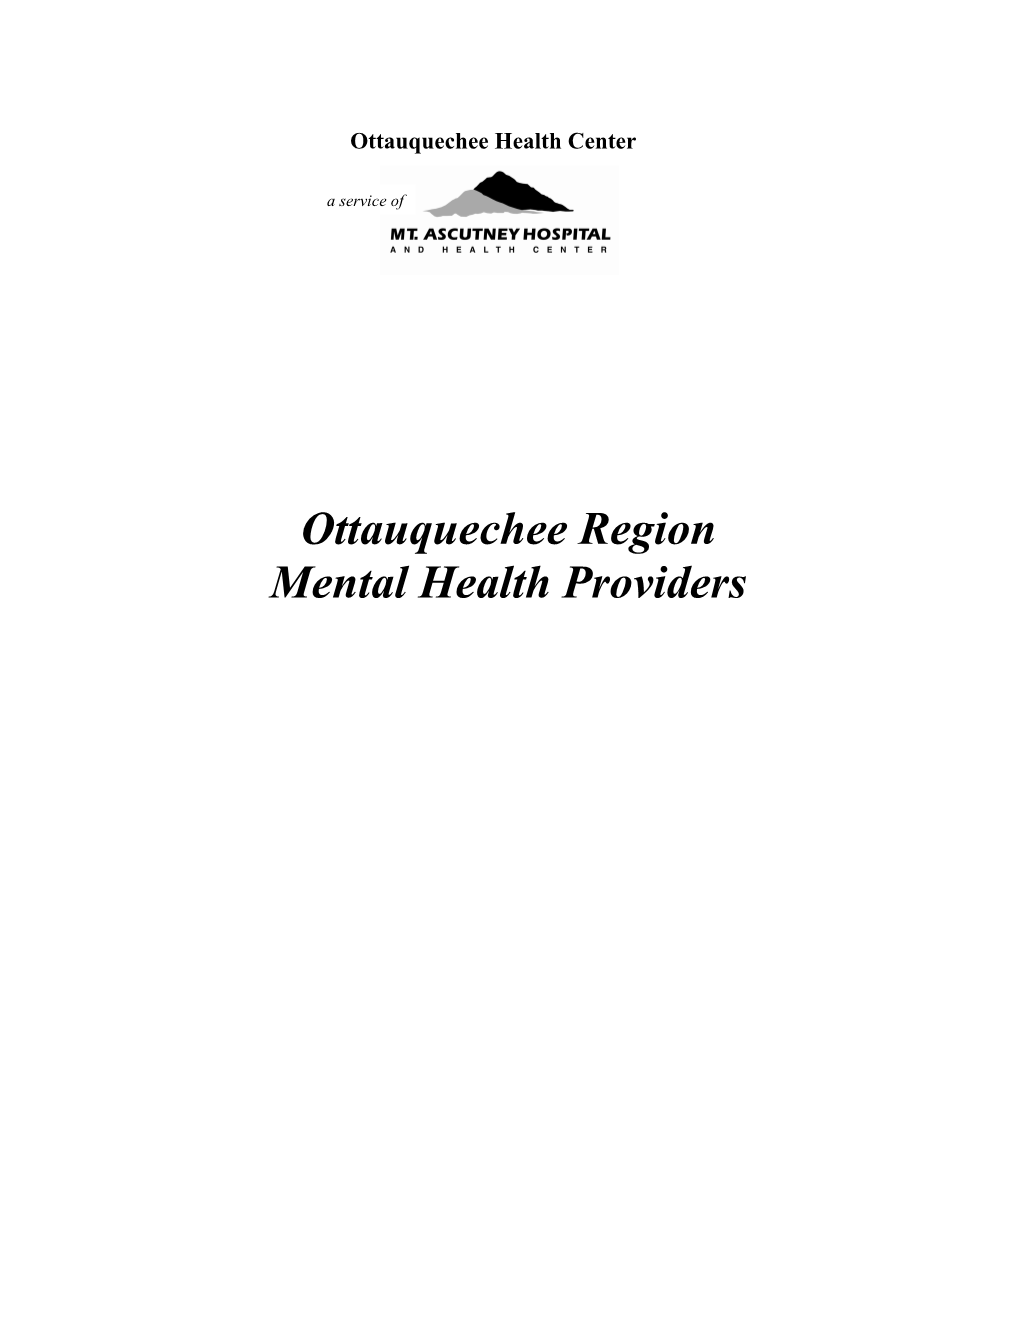 Ottauquechee Region Mental Health Providers